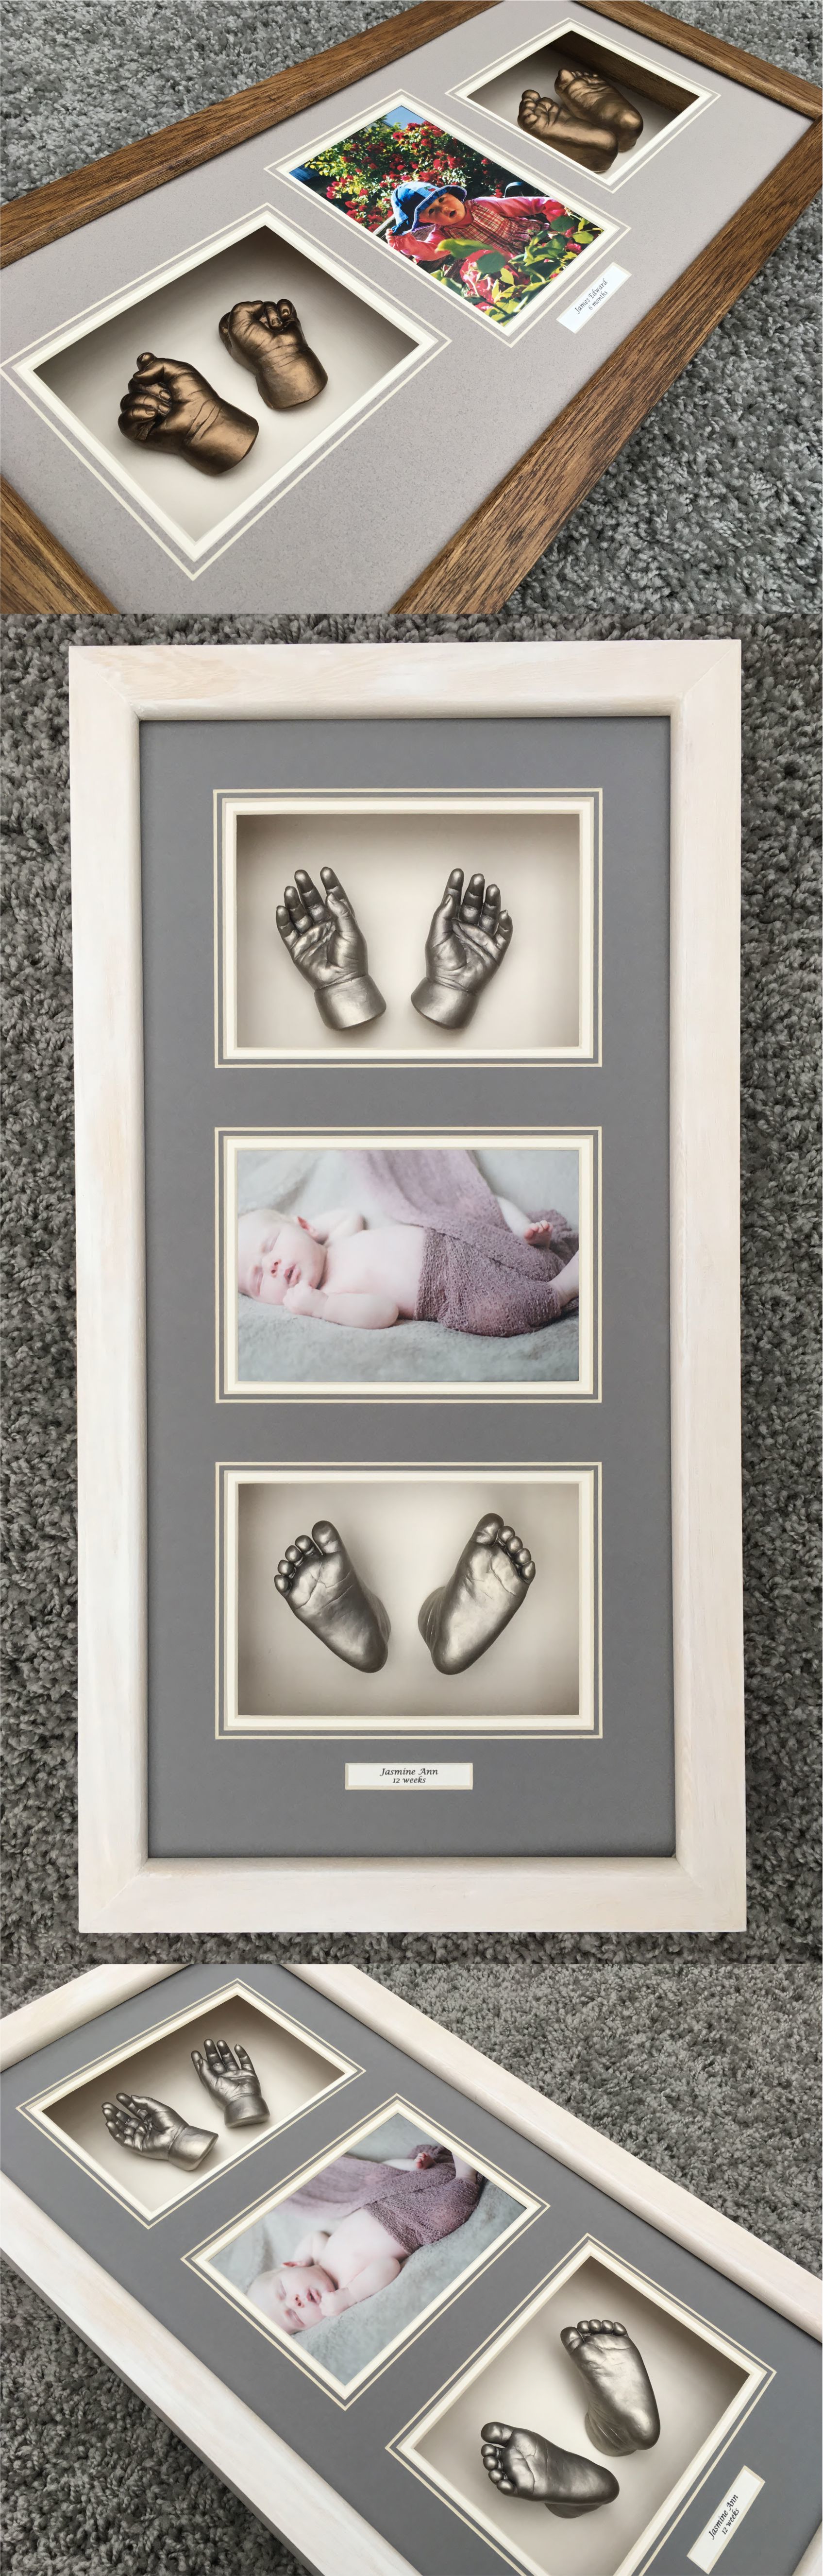 Baby prints photo frames